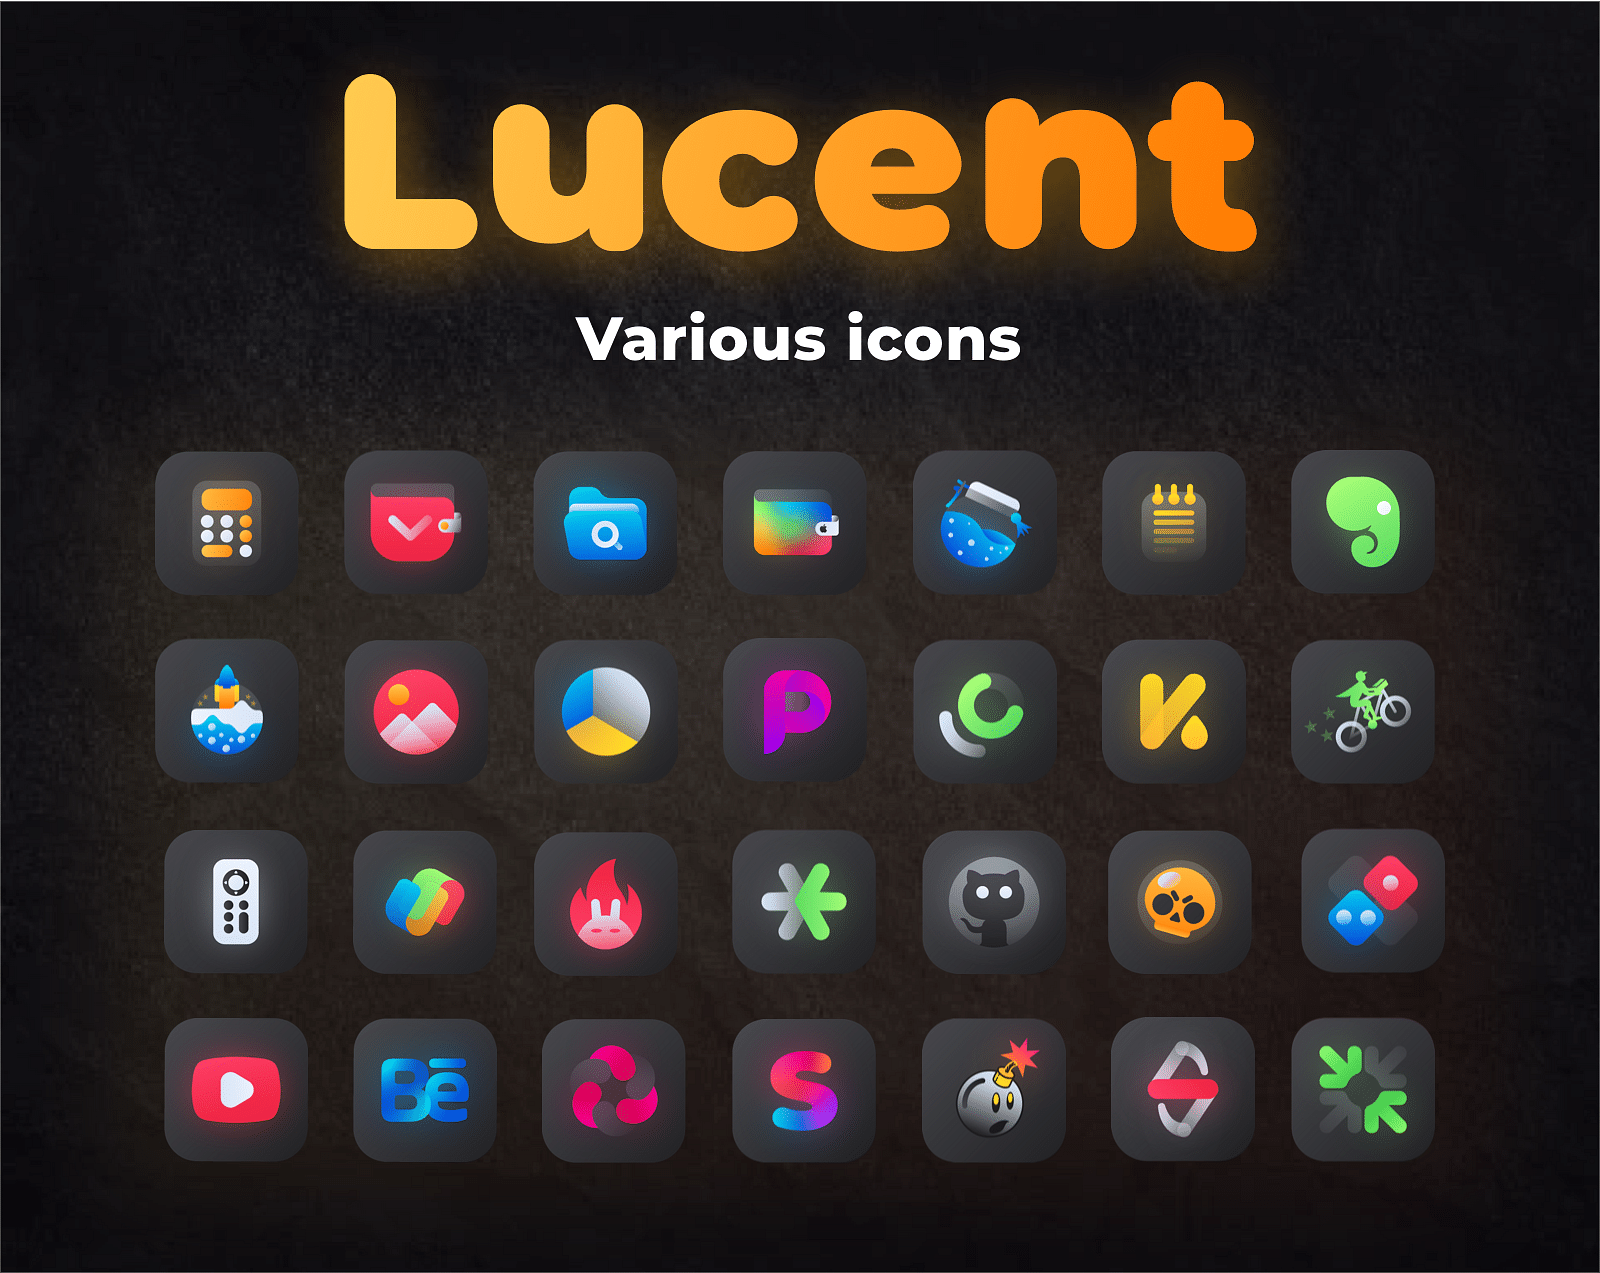 Lucent